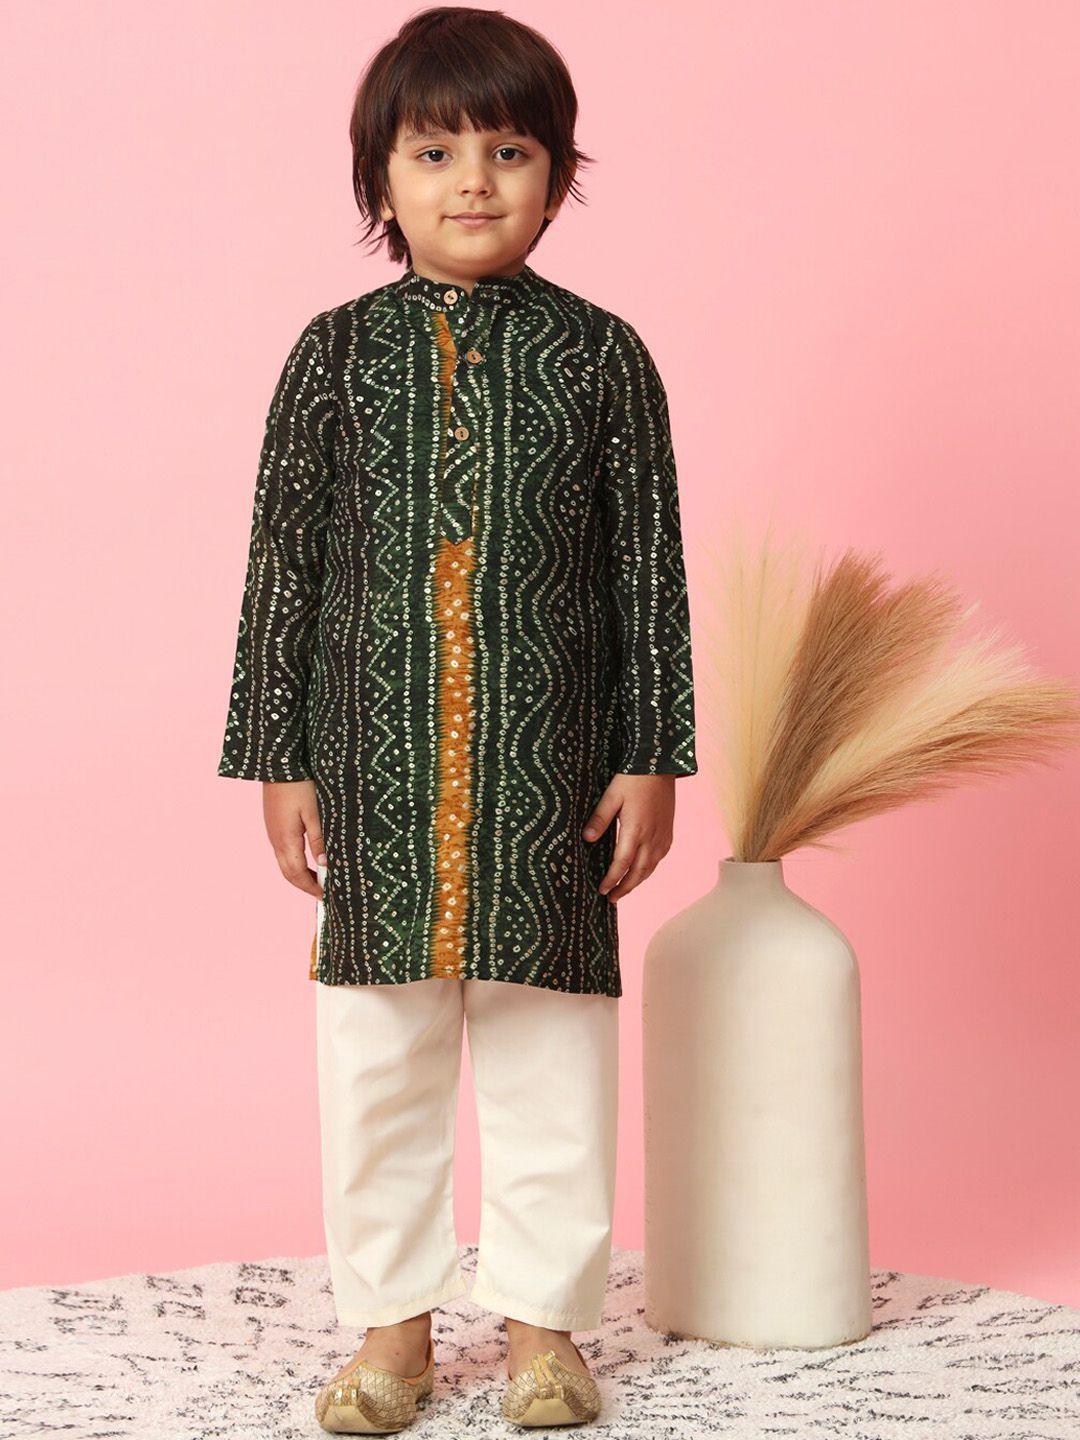 readiprint fashions boys bandhani printed regular kurta with pyjamas